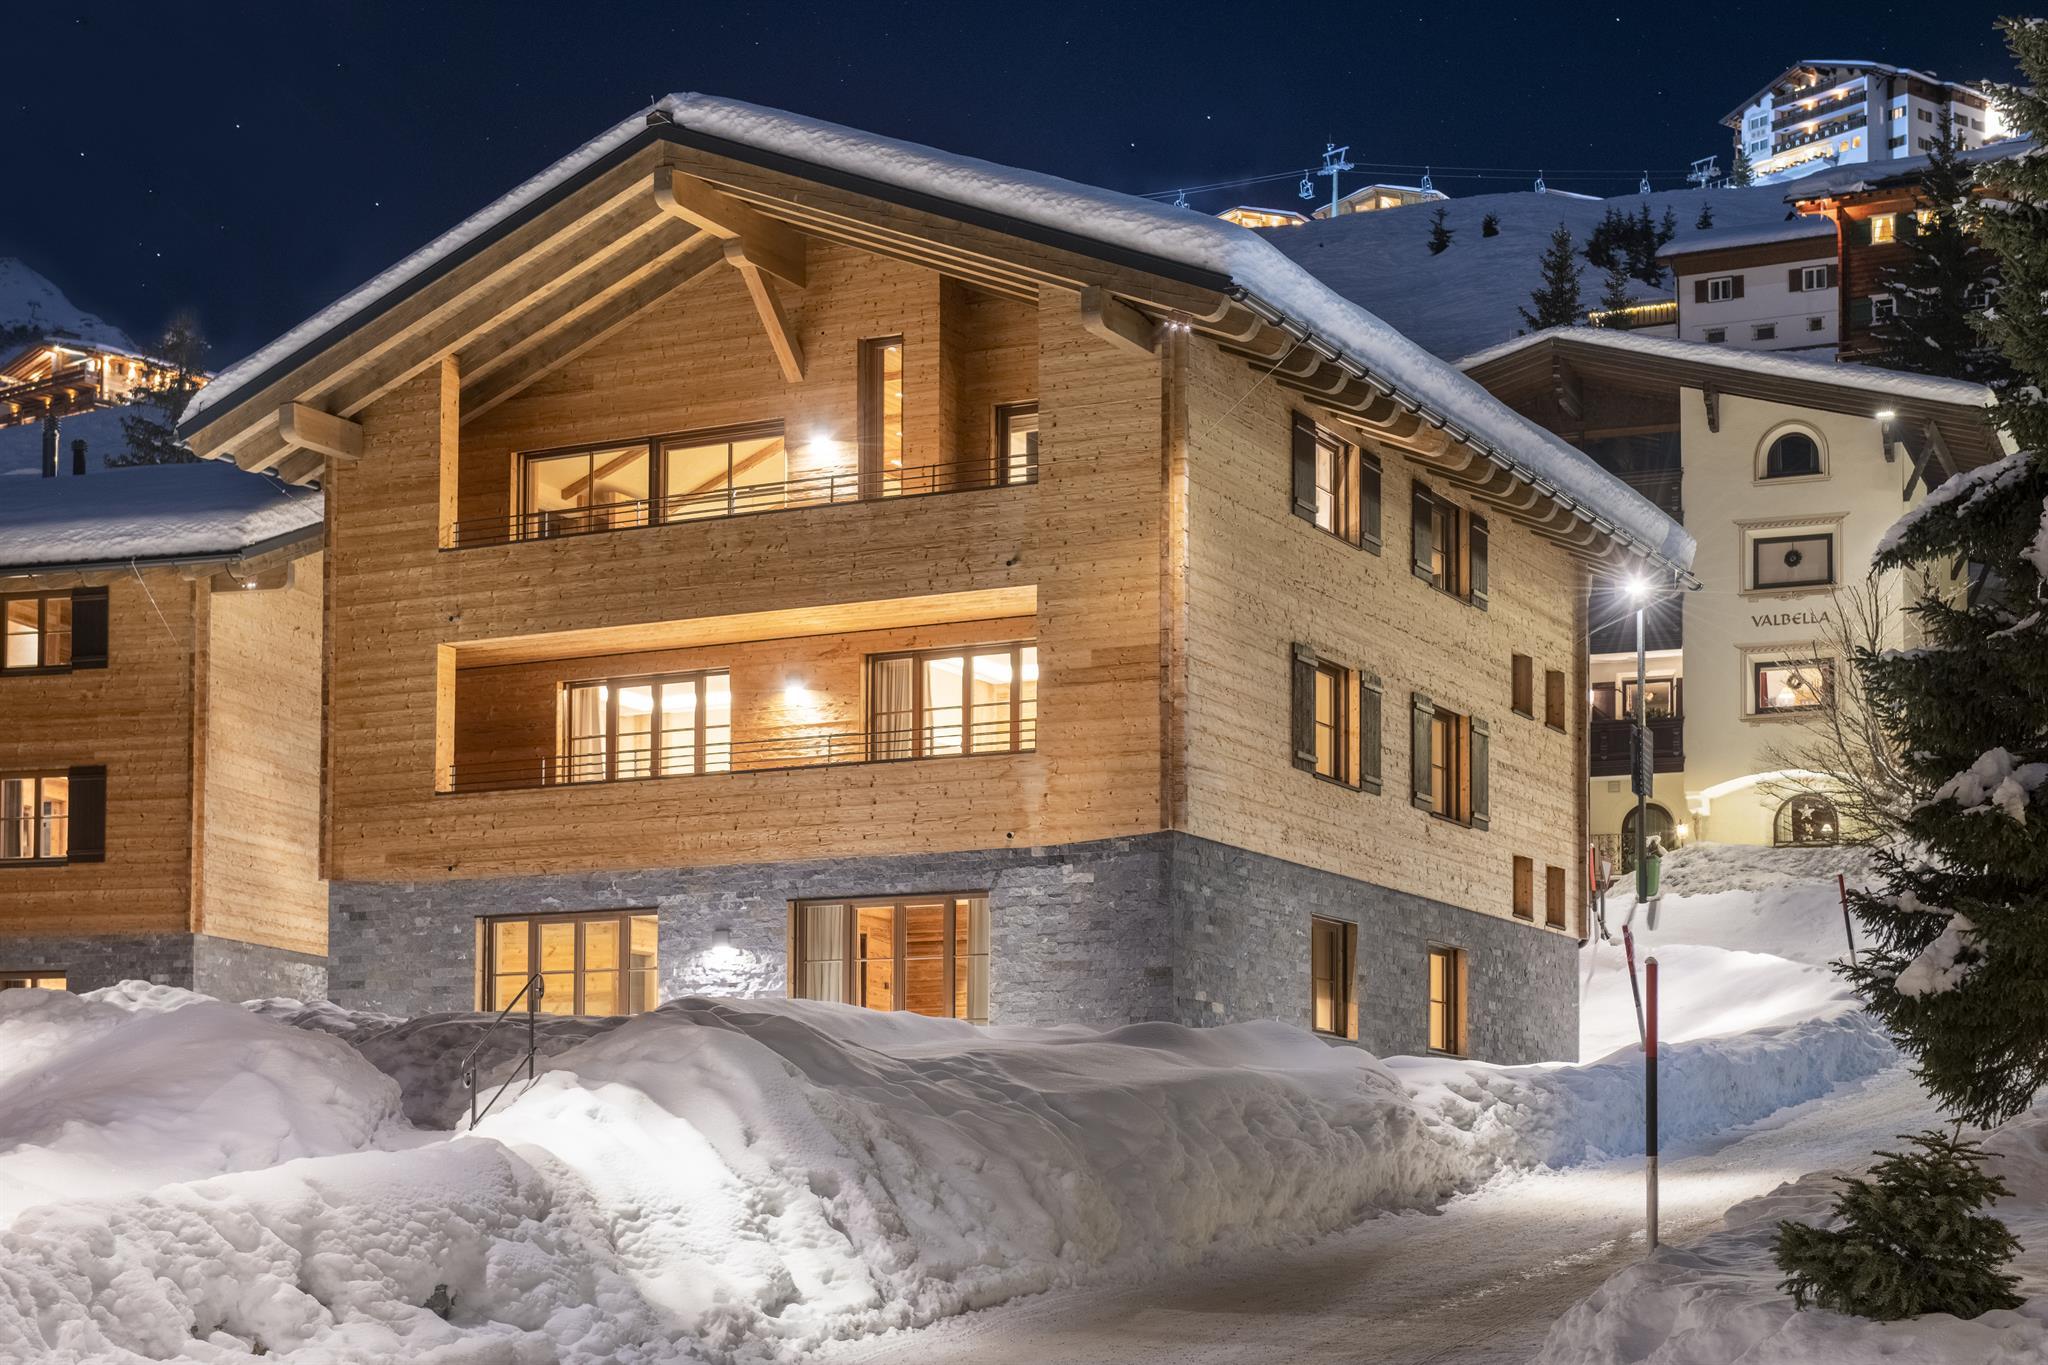 Introducing: Courchevel - An exciting 7th resort for Bramble Ski - Bramble  Ski